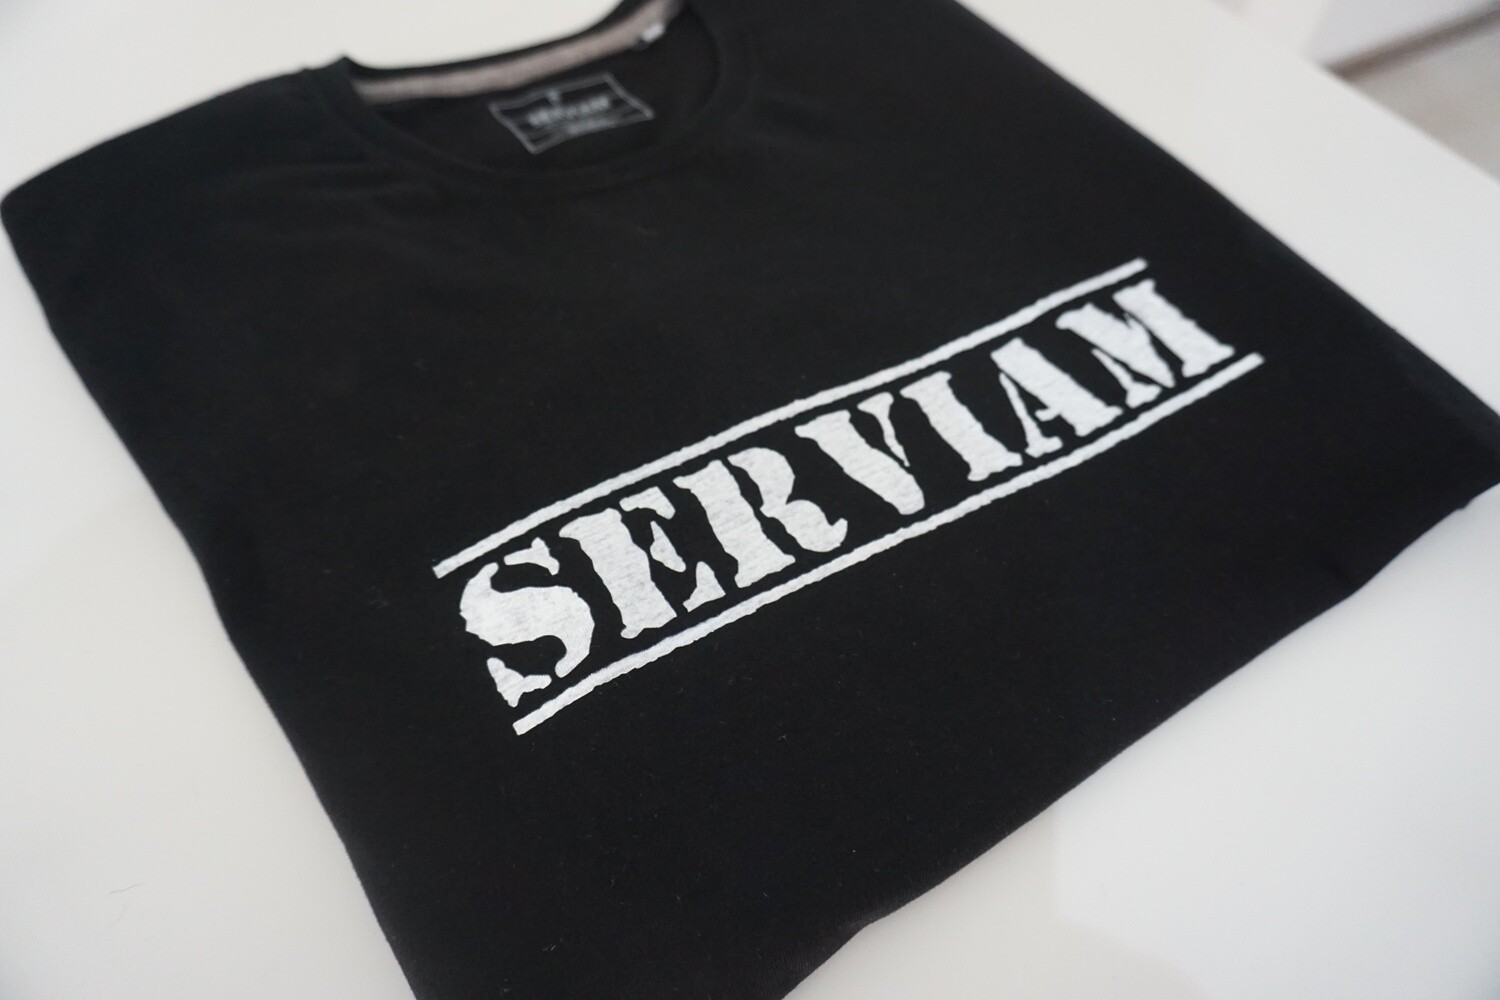 Serviam Classic T-shirt (Small)